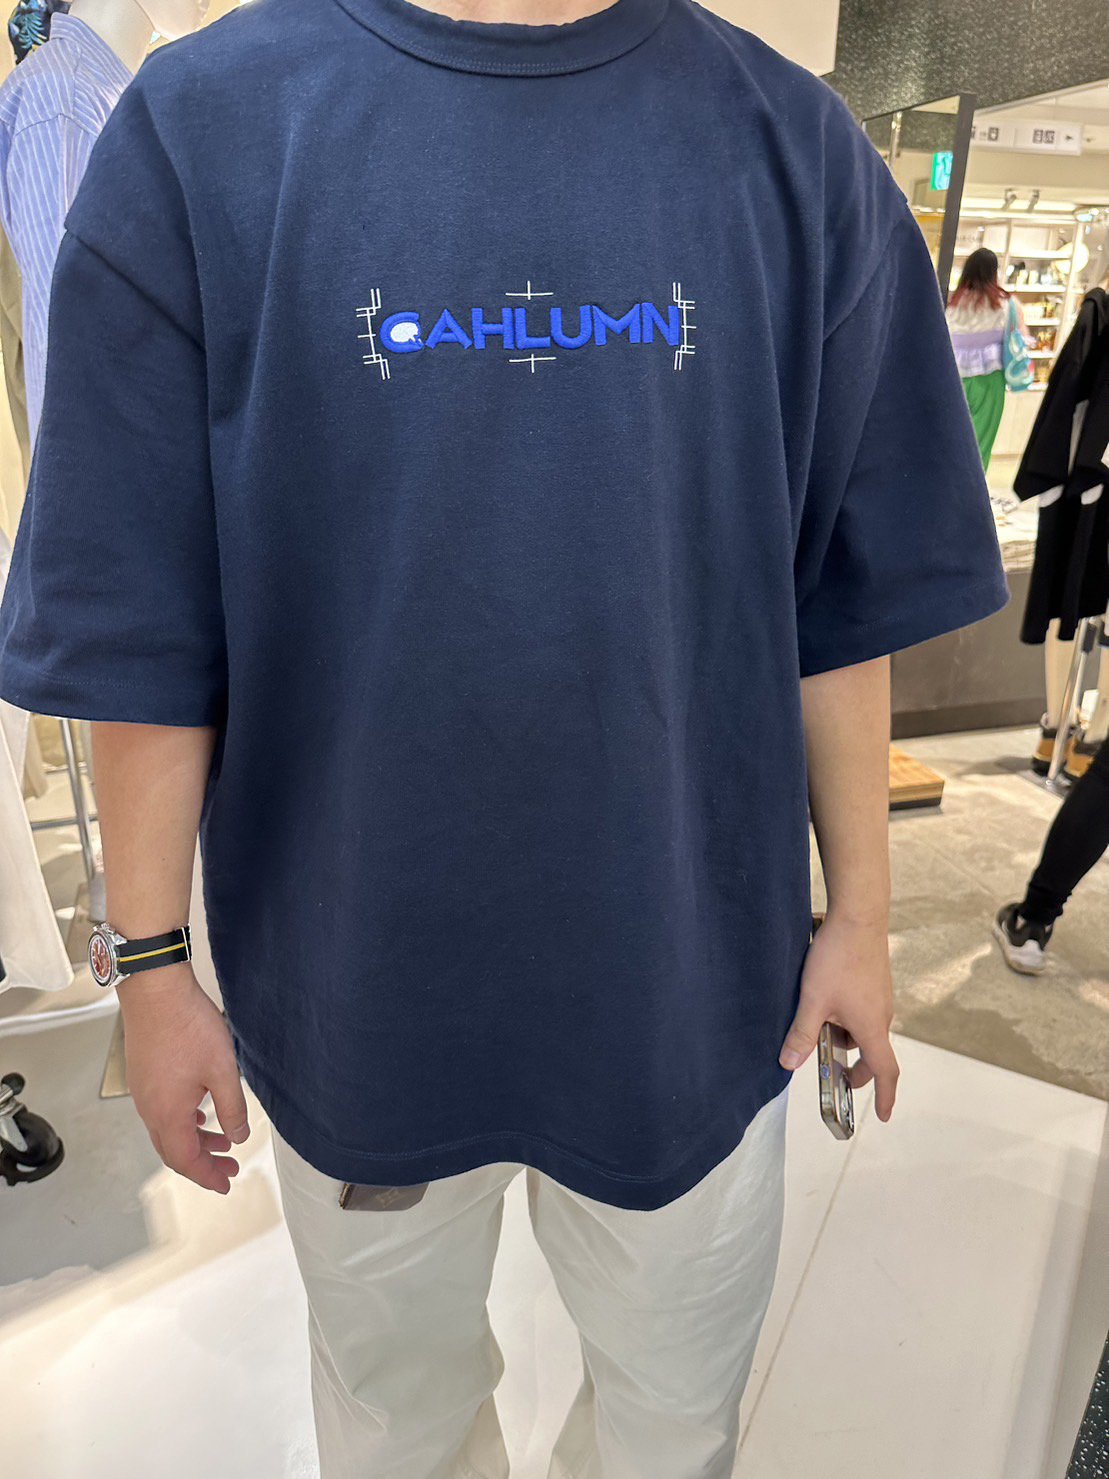 cahlumn TONBO LOGO T-SHIRT 限定 Lサイズ - Tシャツ/カットソー(半袖 